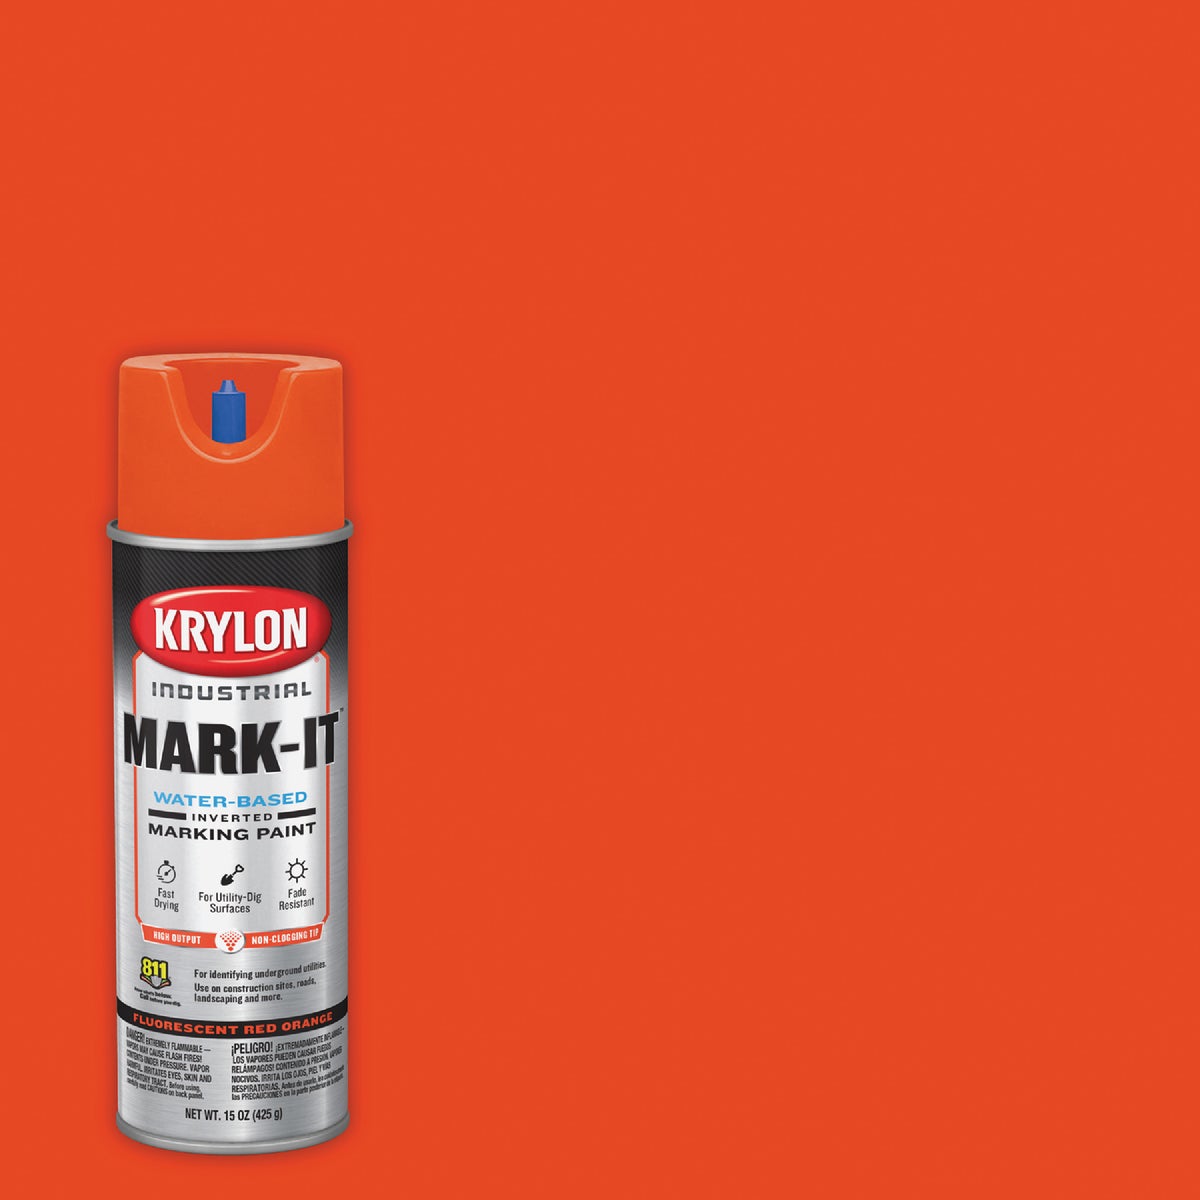 Krylon Mark-It 732108 Industrial WB Fluorescent Red Orange Inverted Marking Paint